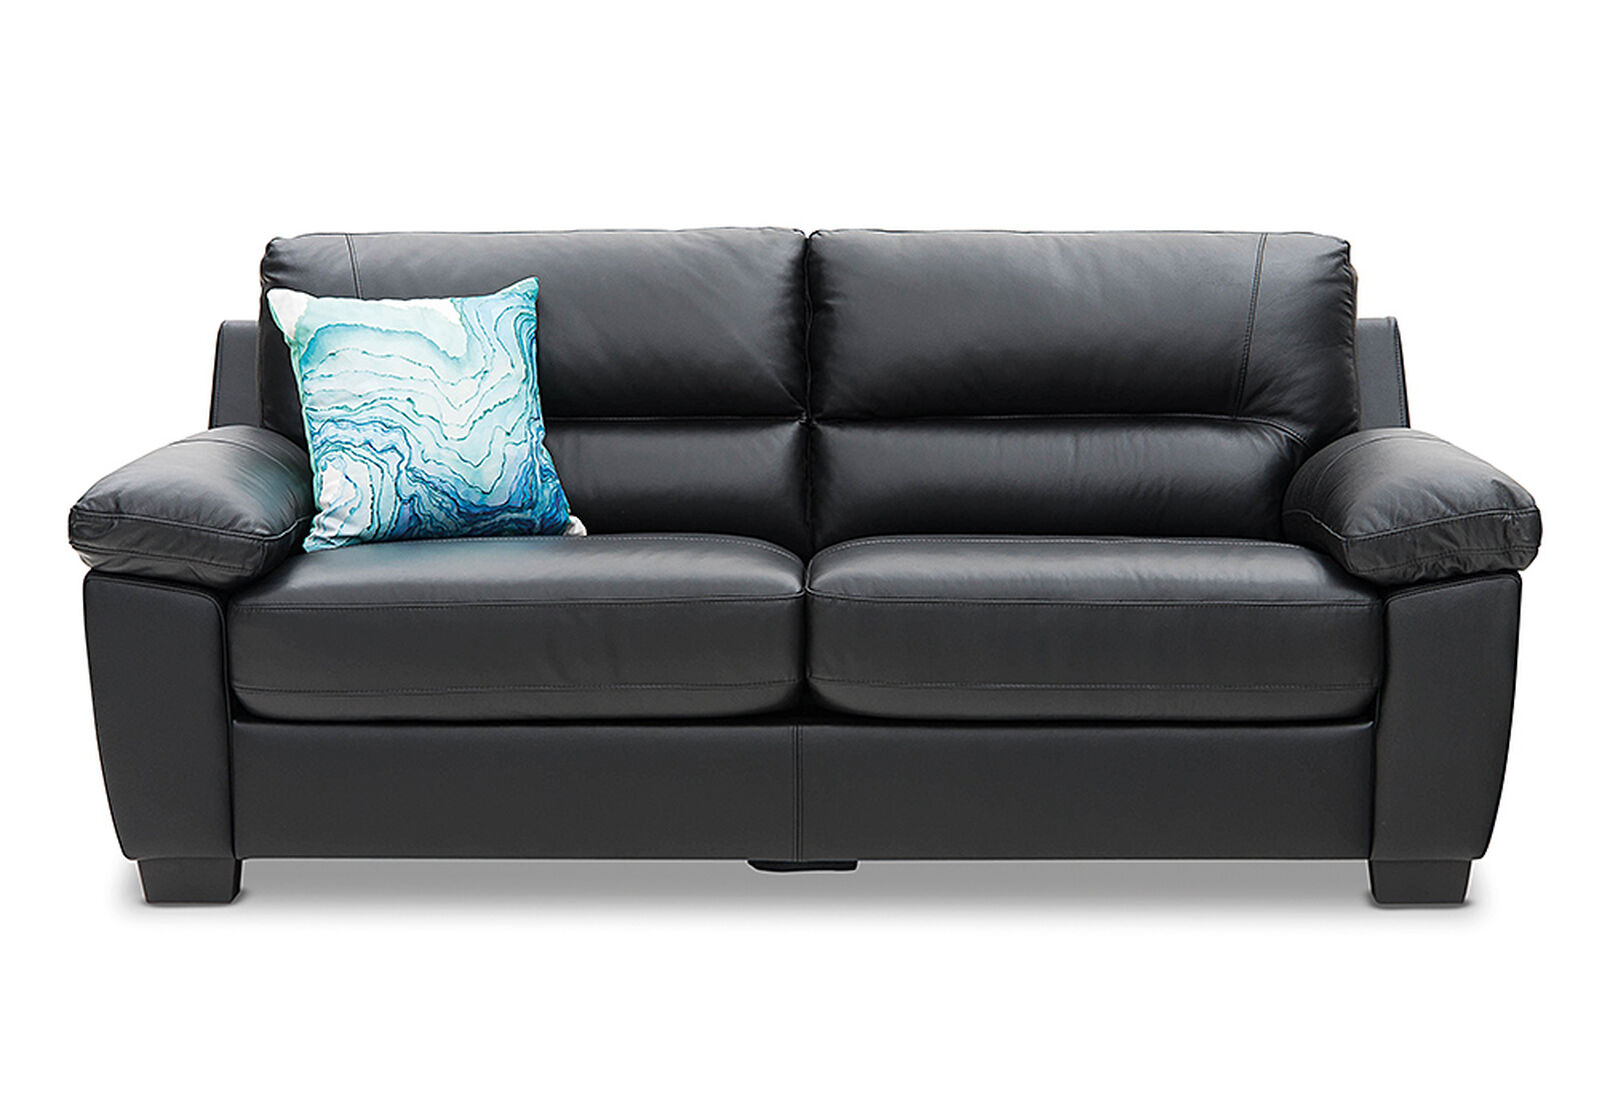 BLACK COLIN Leather Sofa Bed | Amart Furniture